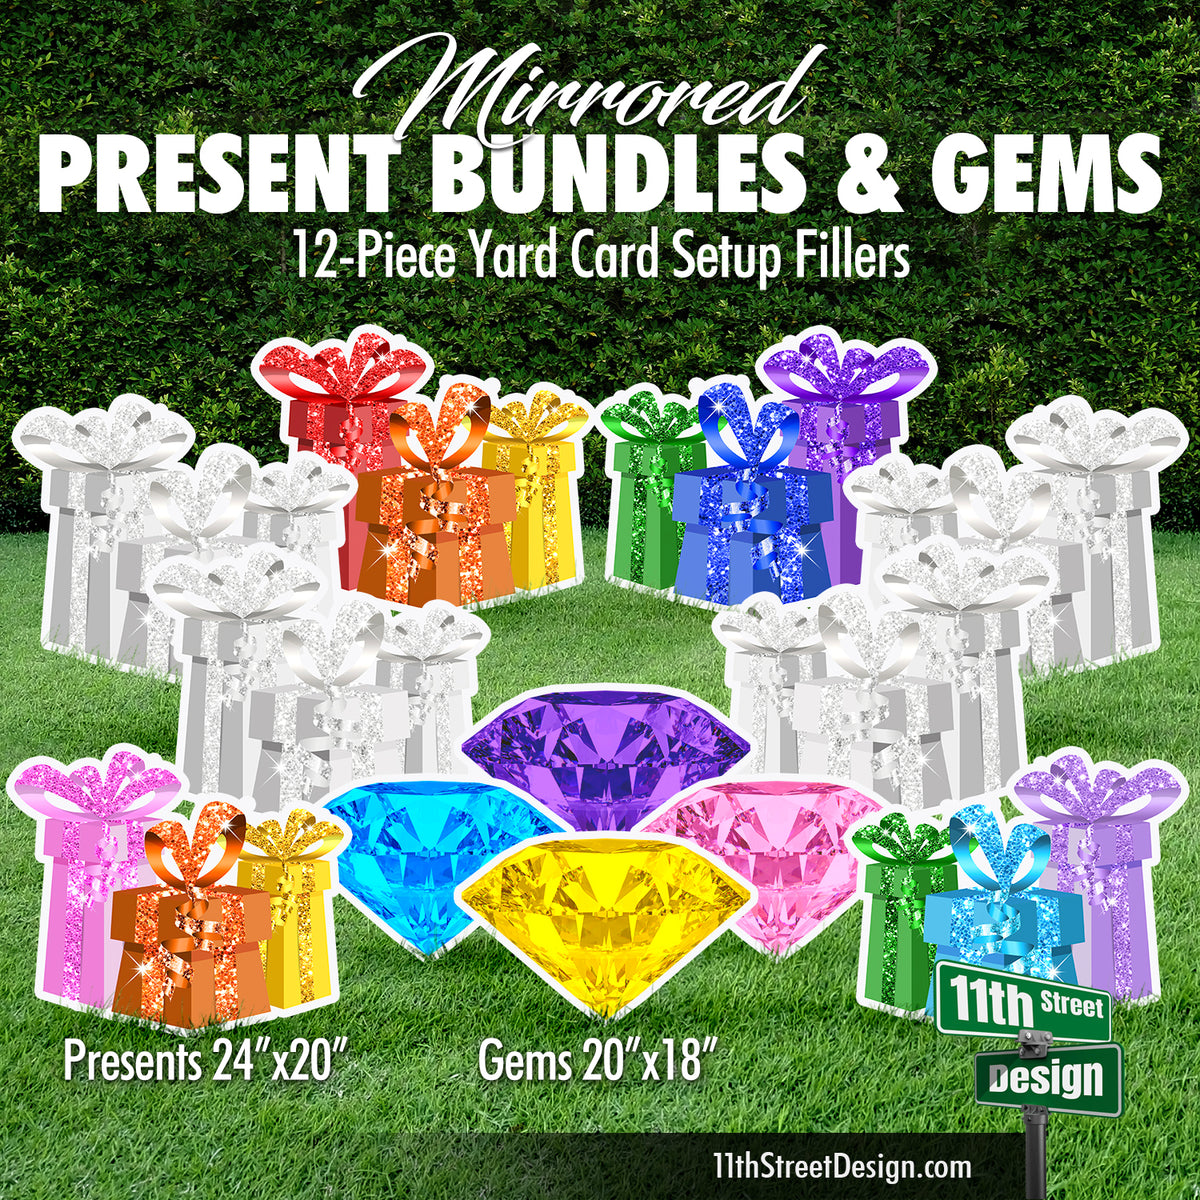 Rainbow Present Bundles and Gems - Mirrored Yard Card Setup Fillers